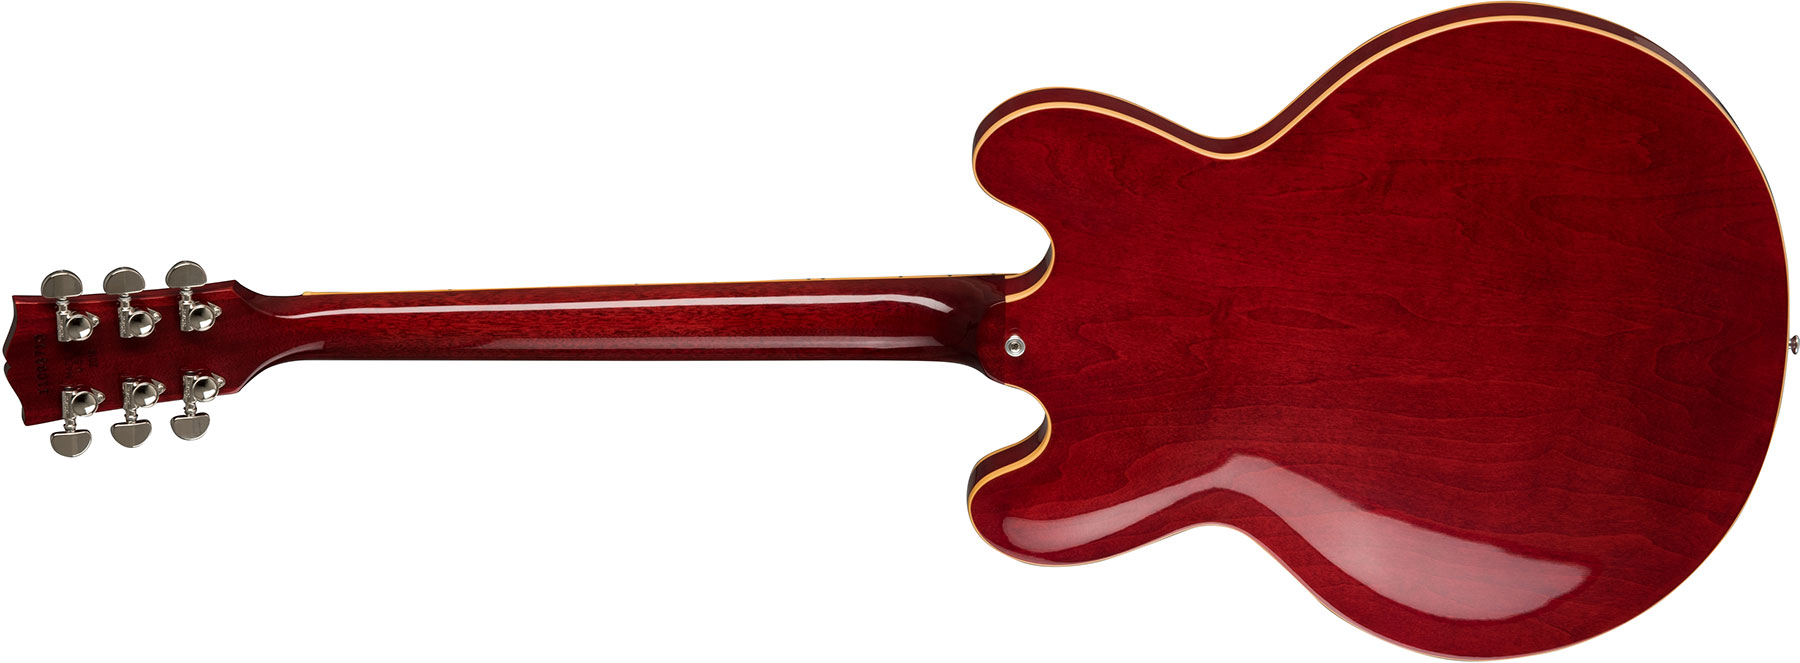 Gibson Es-335 Dot 2019 Hh Ht Rw - Antique Faded Cherry - Semi hollow elektriche gitaar - Variation 2